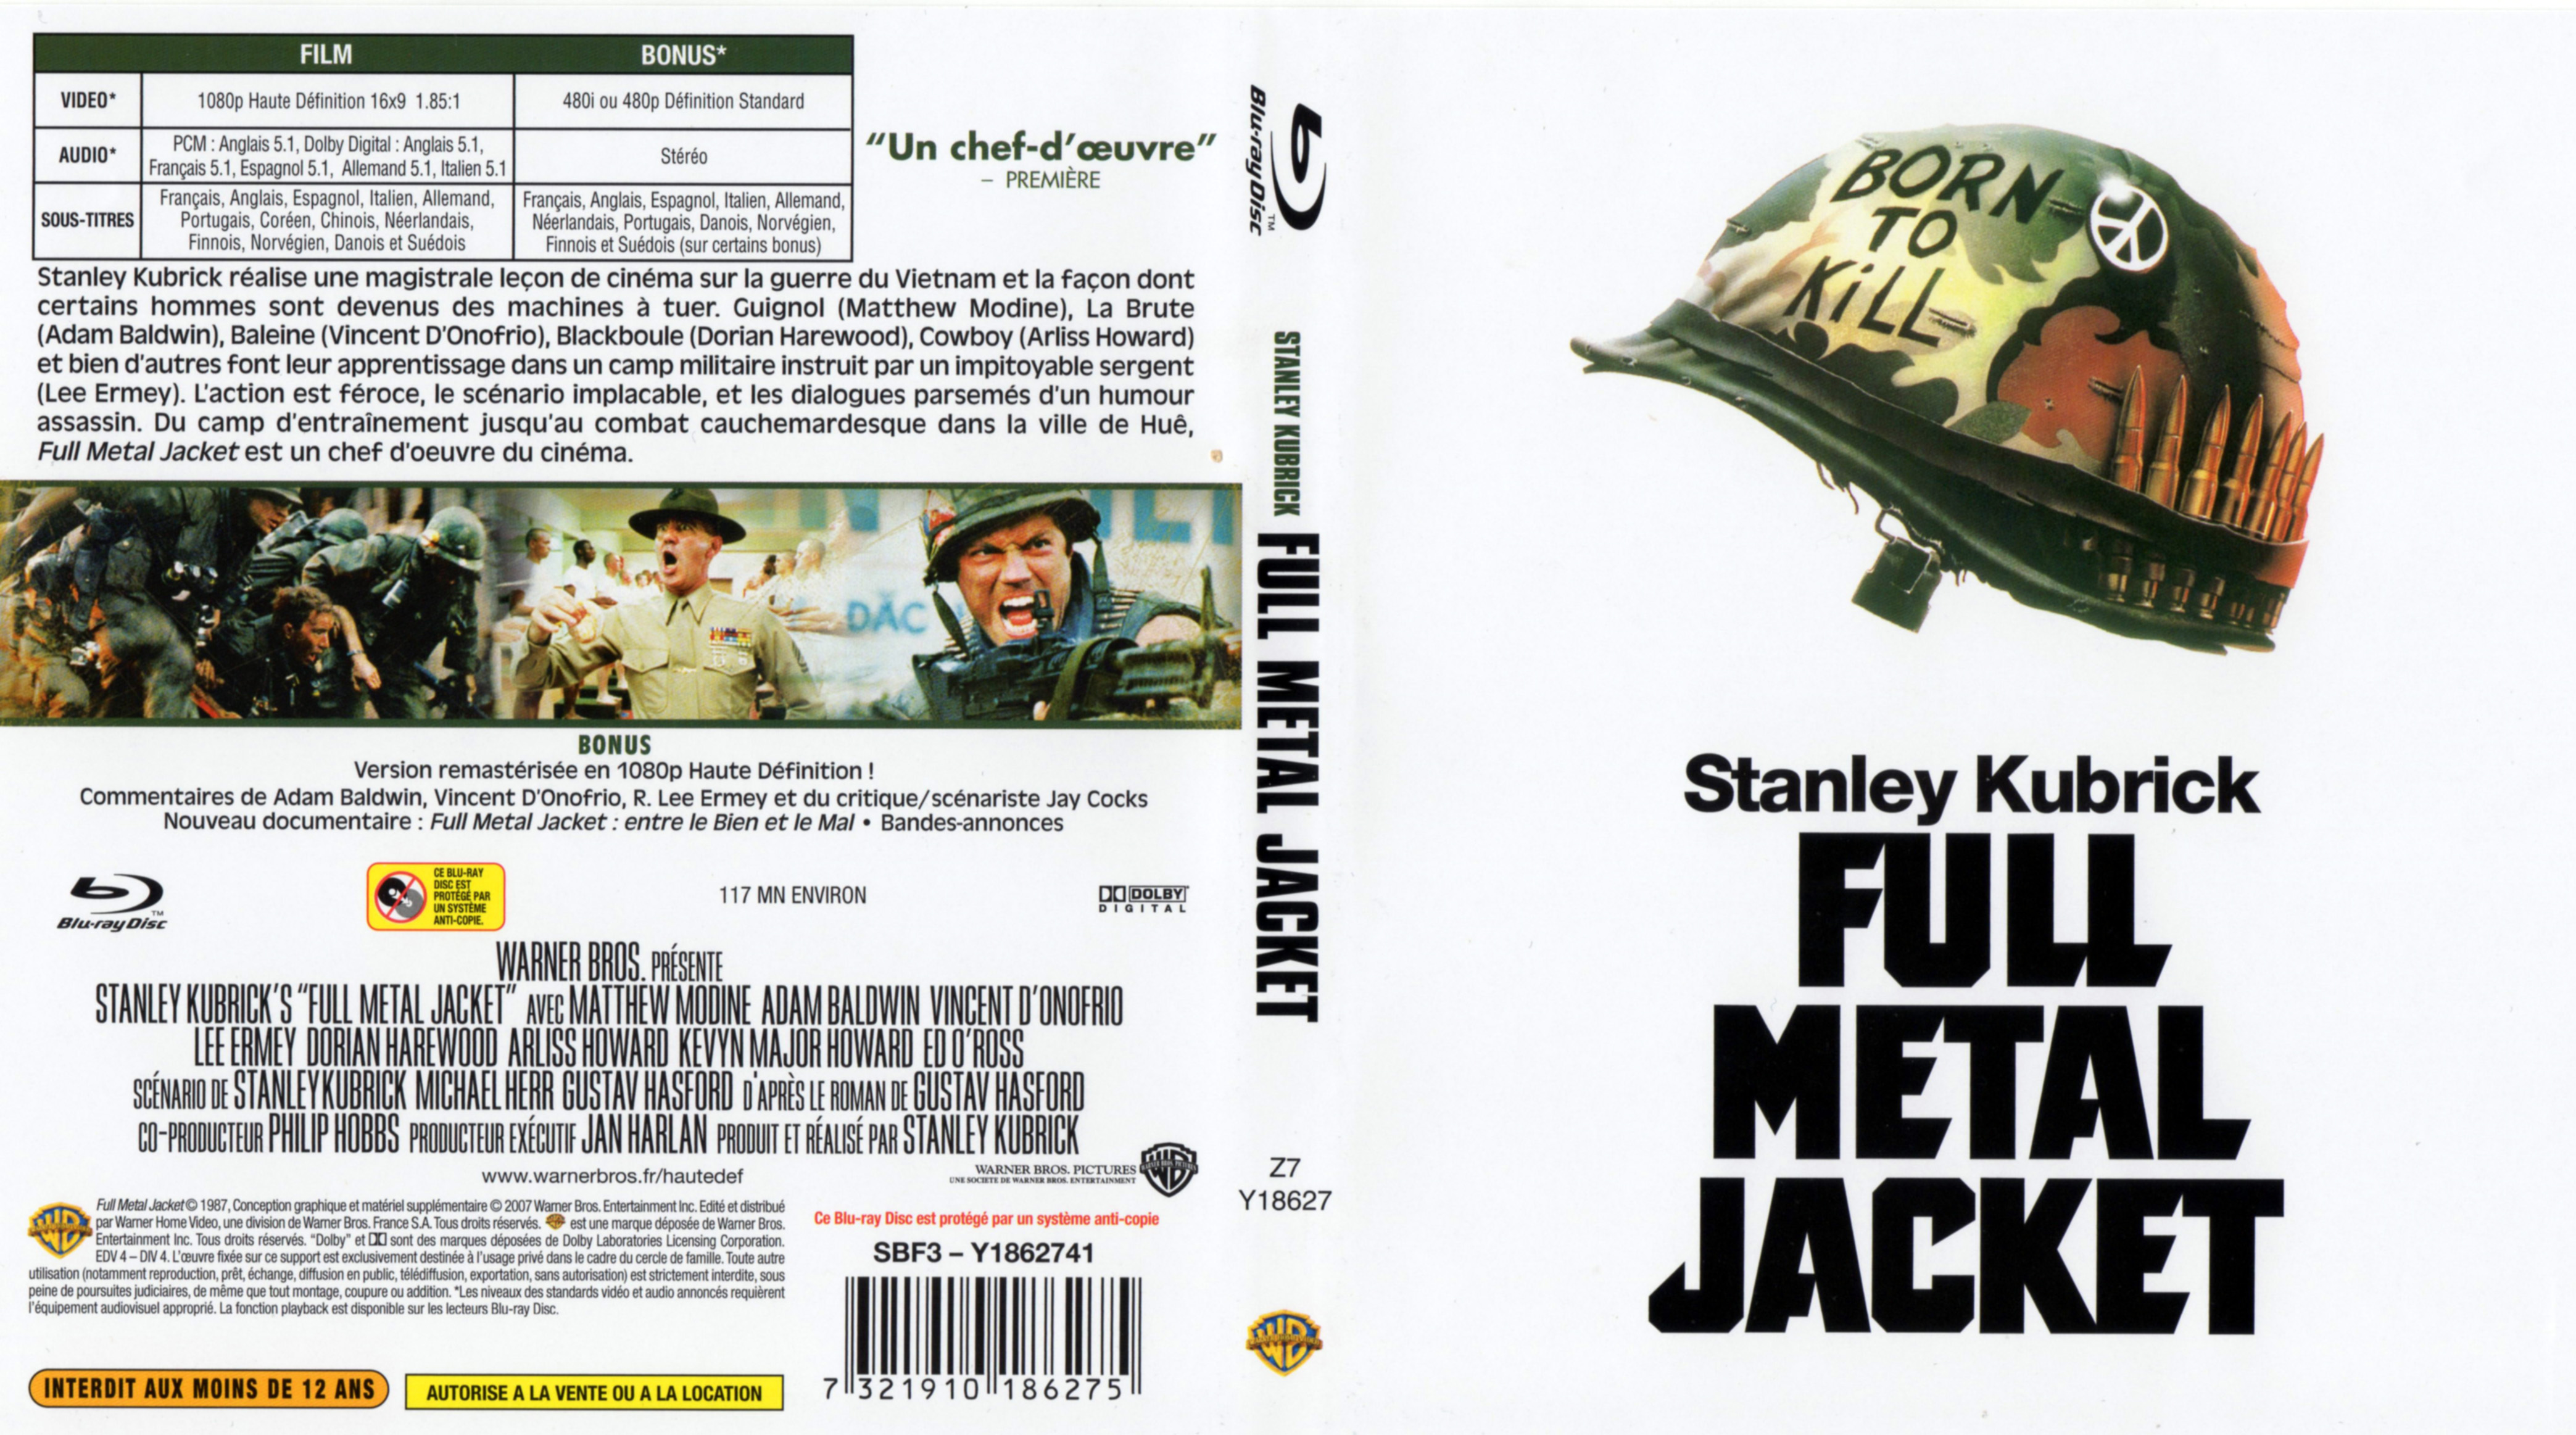 Jaquette DVD Full metal jacket (BLU-RAY)